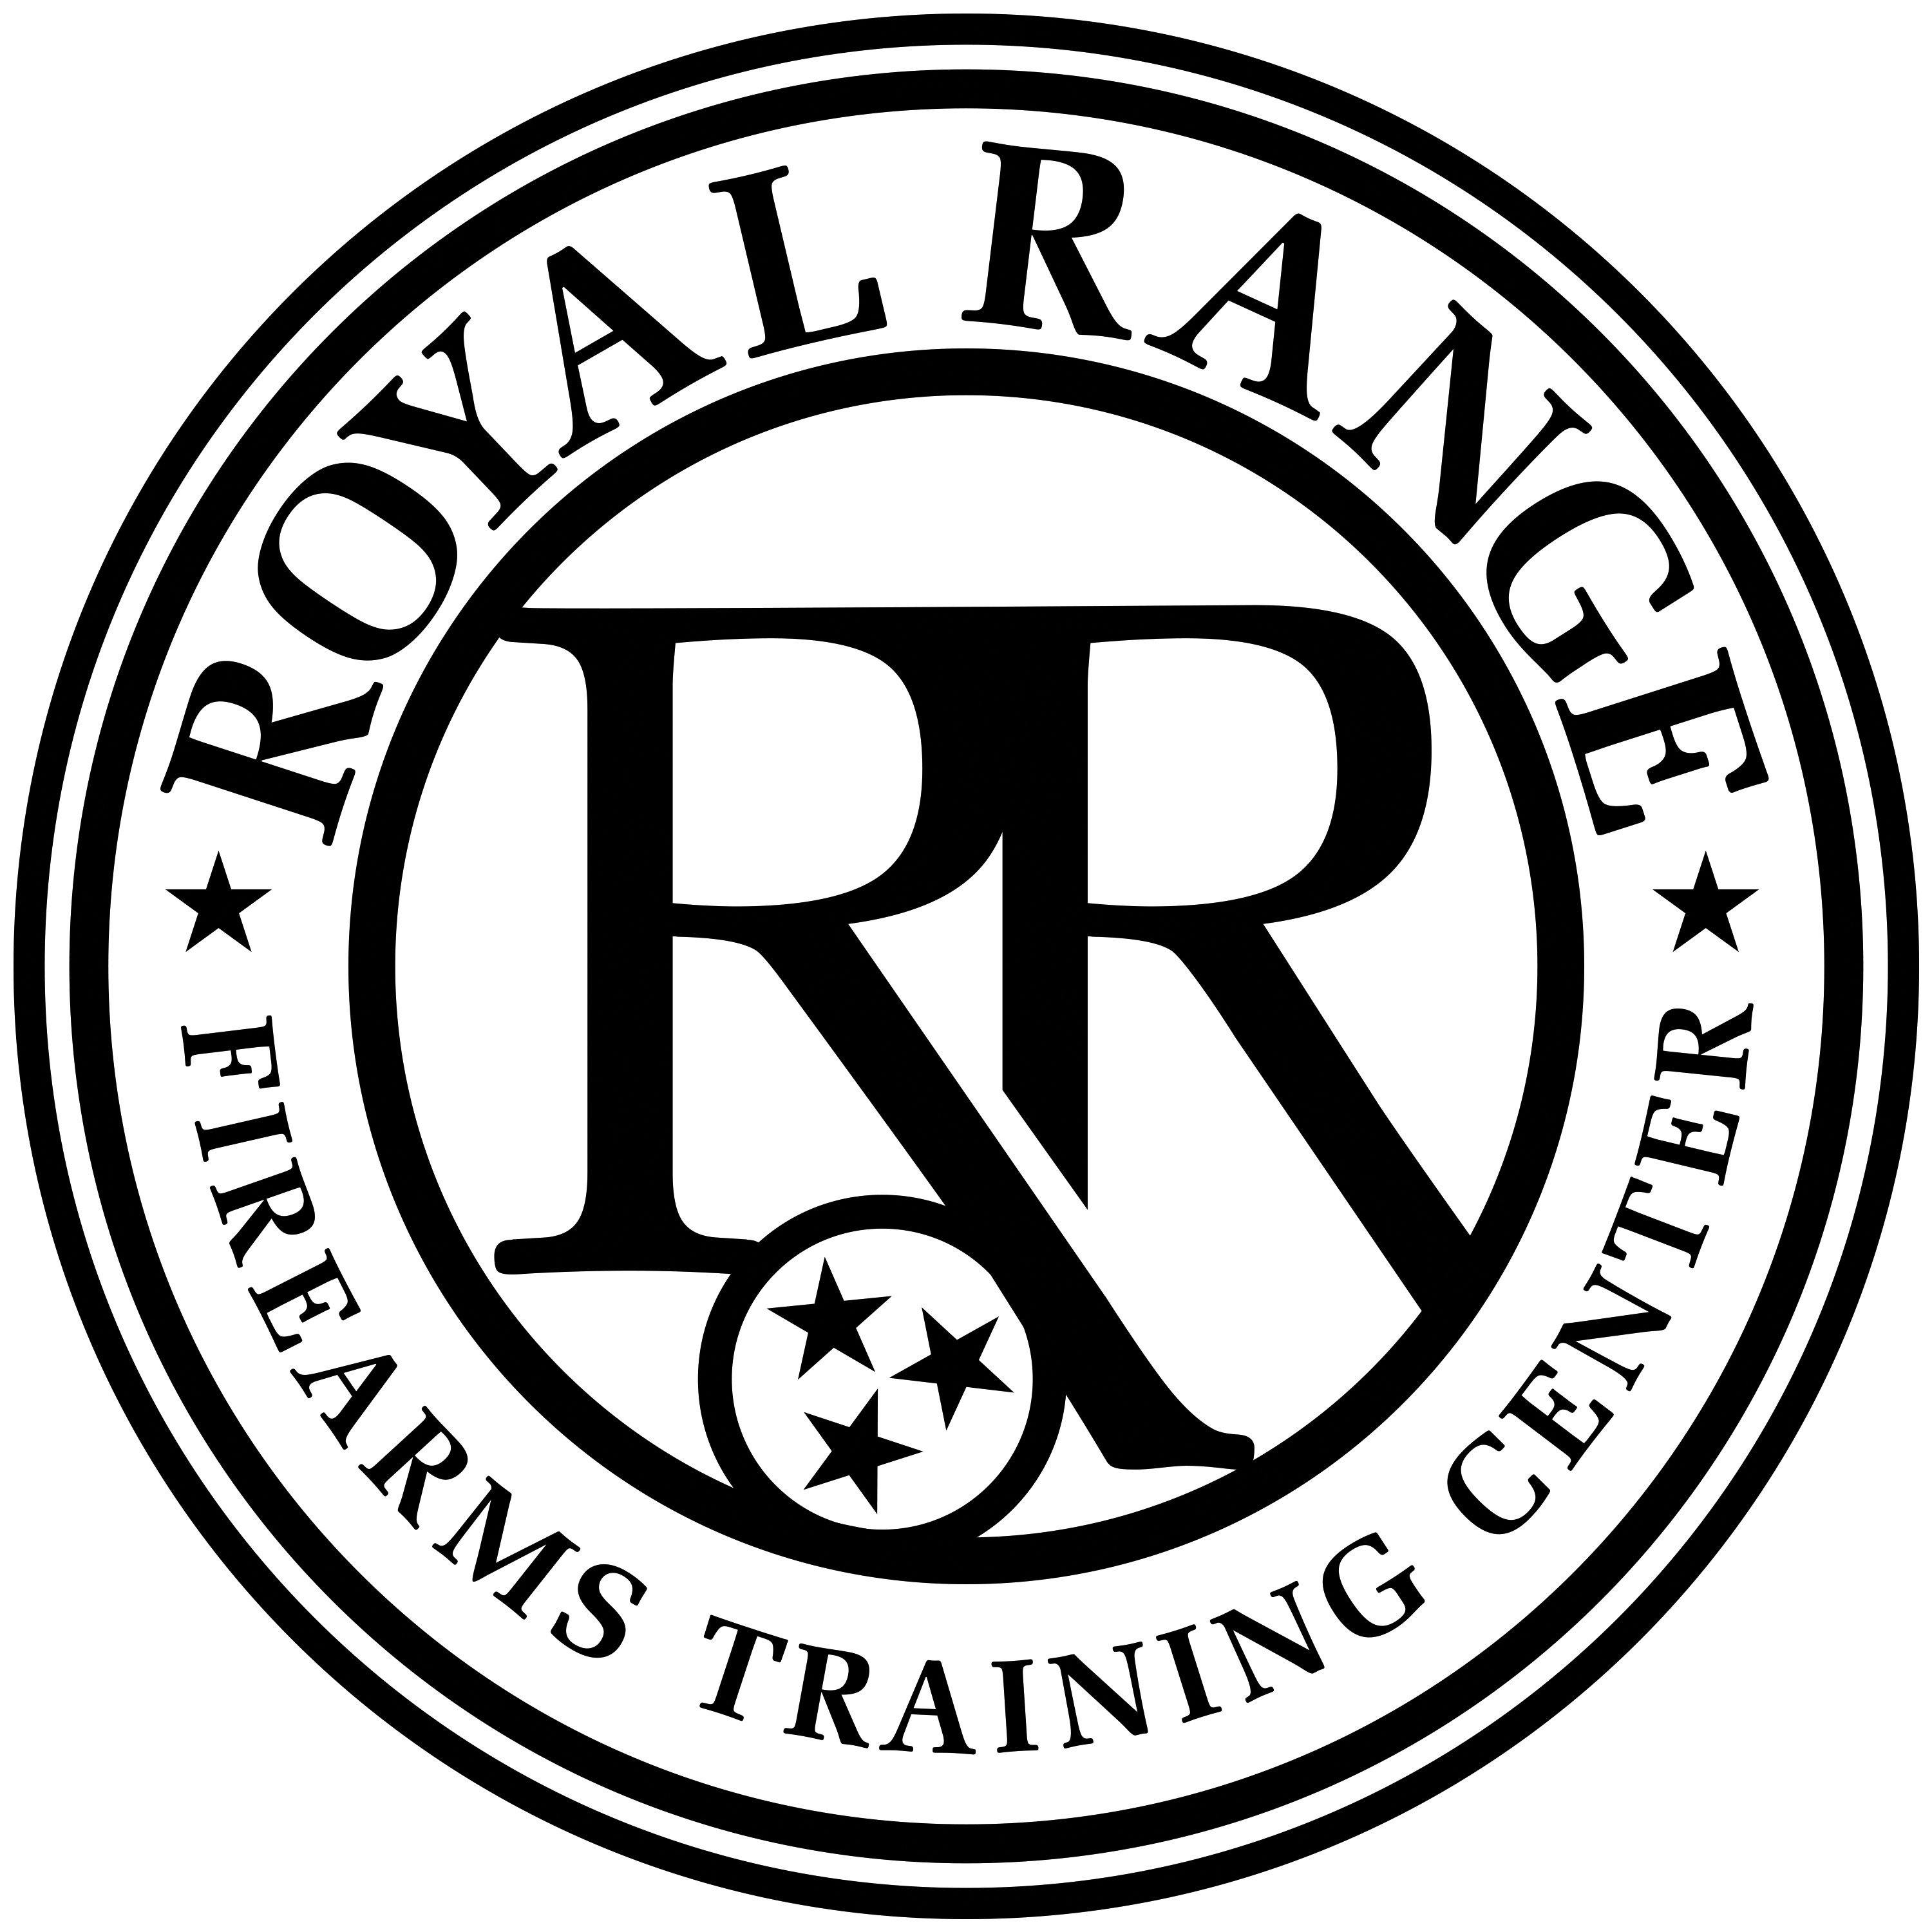 Royal Range Training Calendar - Armed Guard 16hr